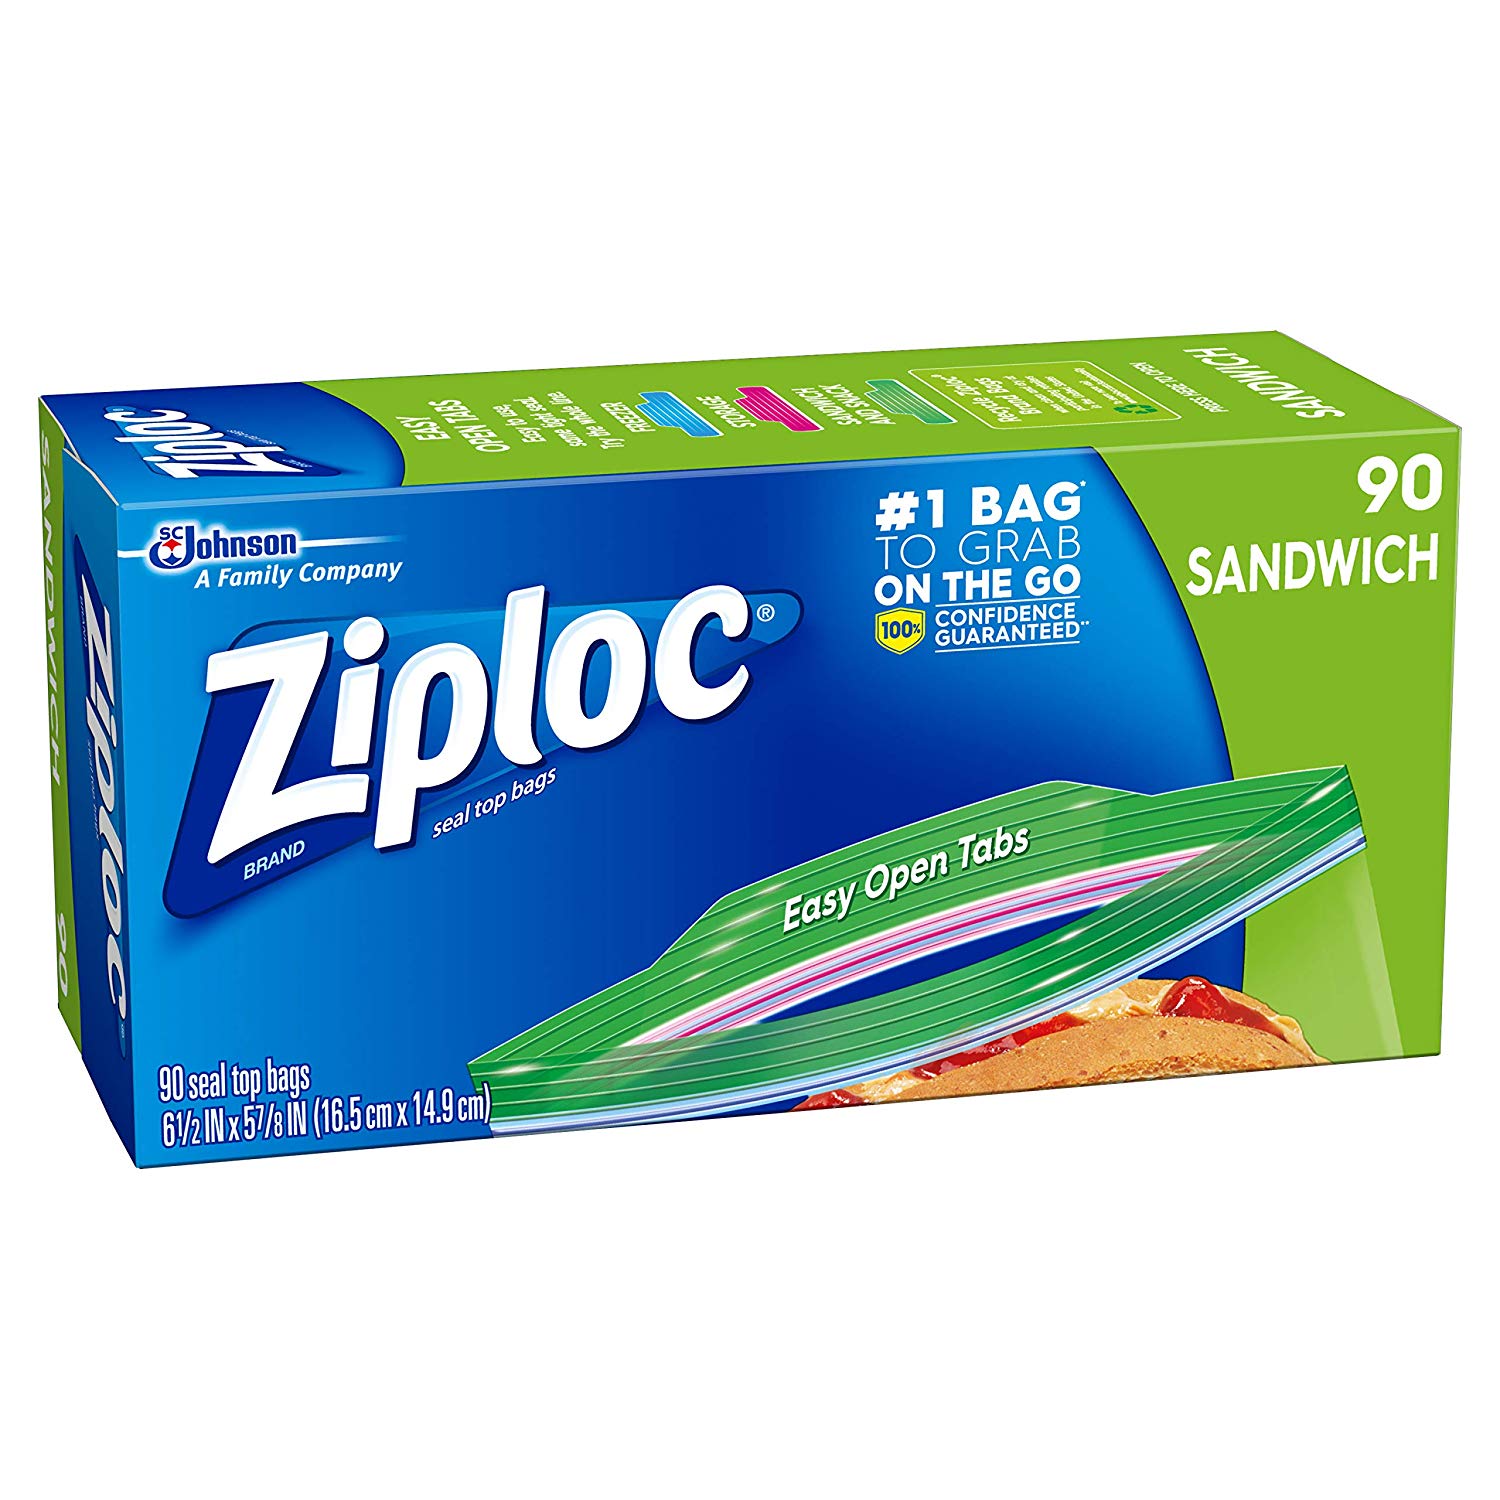 Ziploc Sandwich Bag, 90 Count $2.12 (REG $4.09)